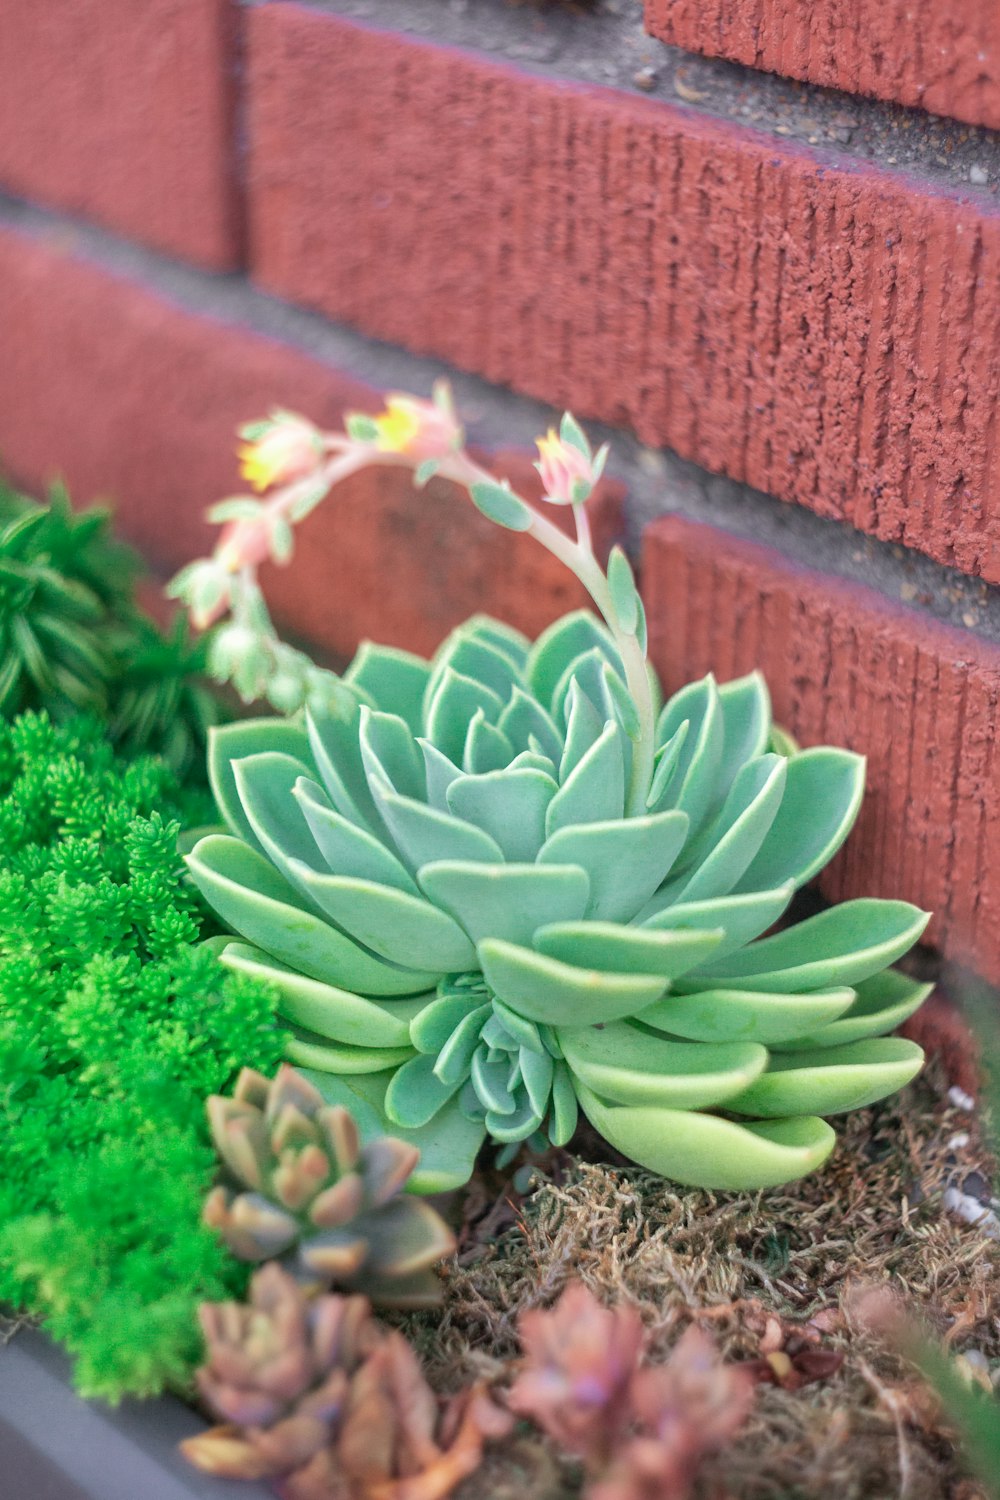 a close up of a plant near a brick wall